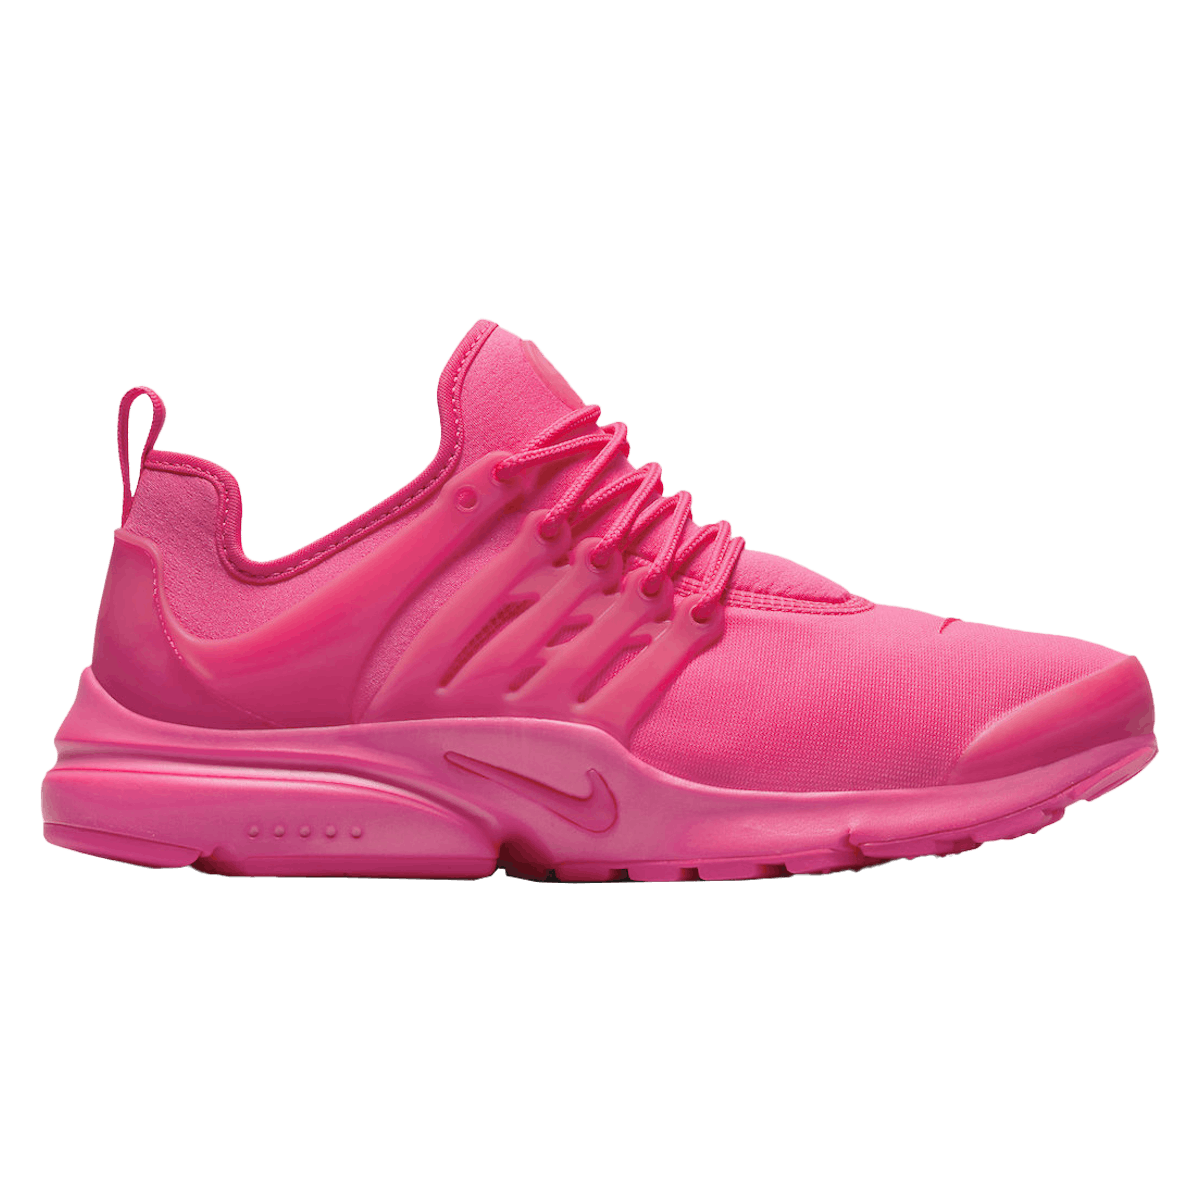 Nike Air Presto "Triple Pink"